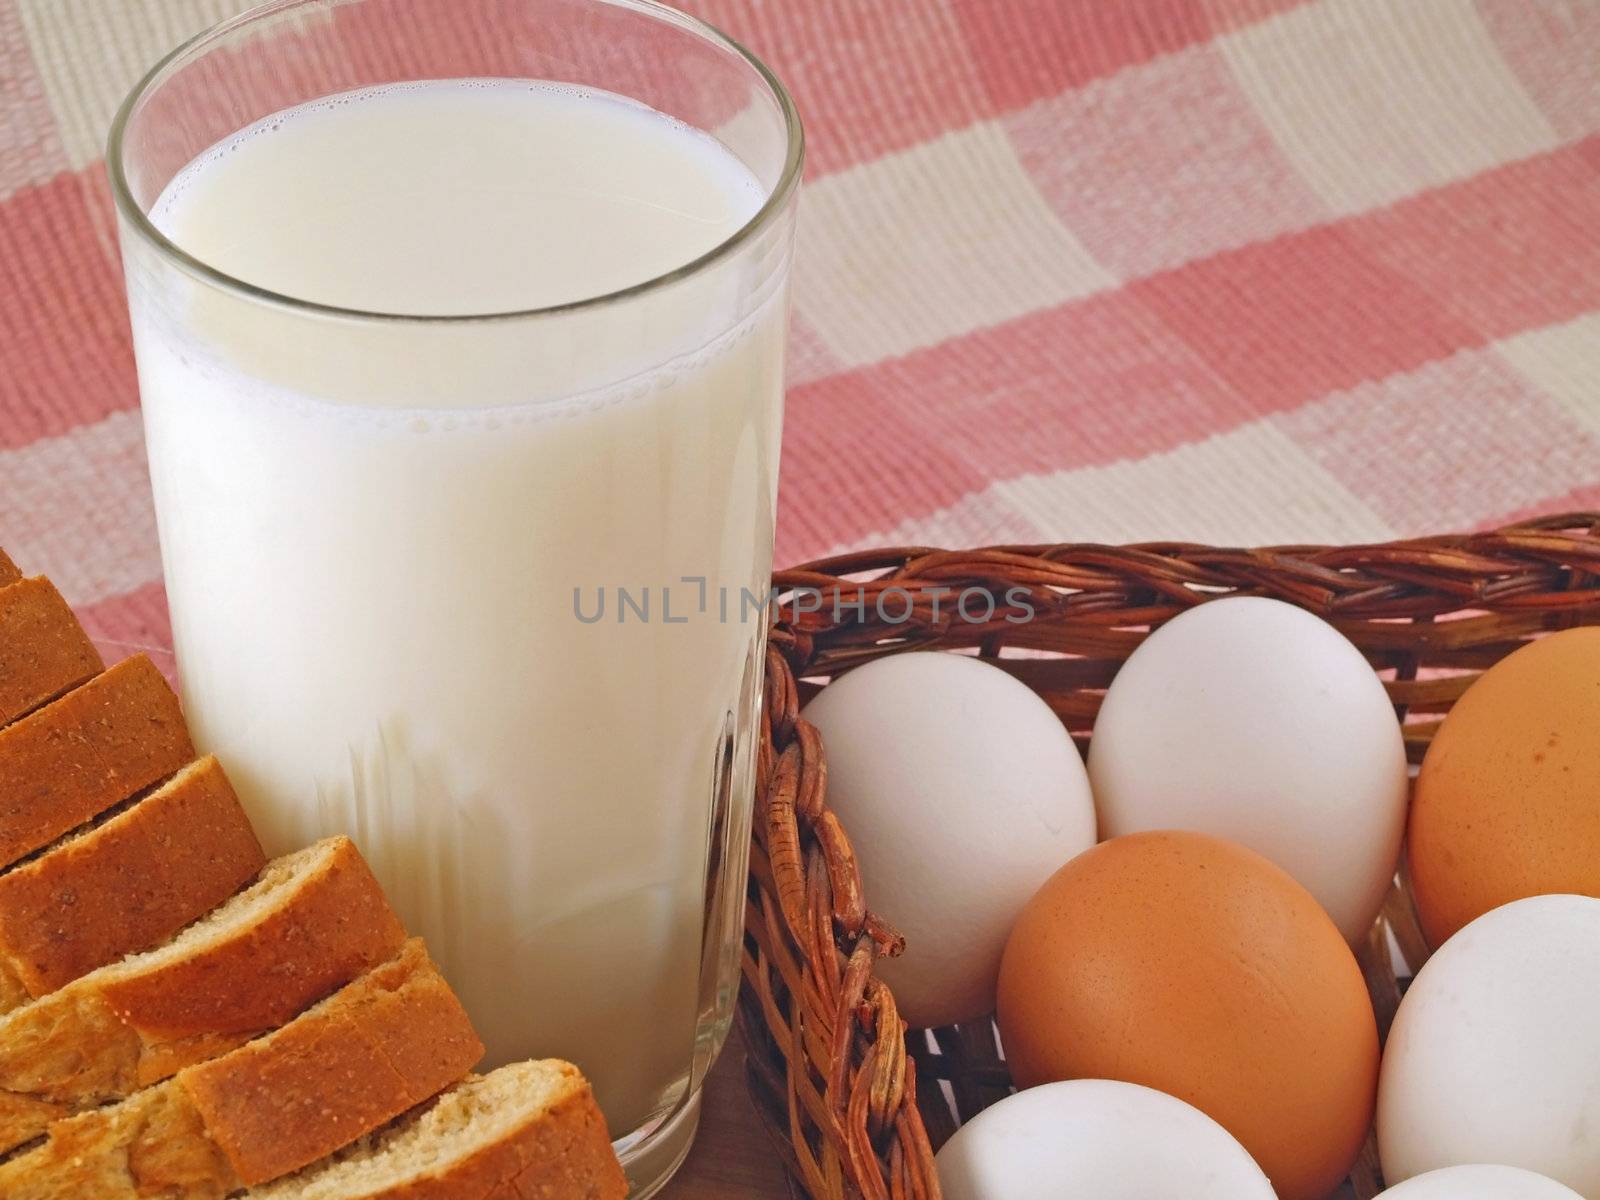 Milk, Eggs, and Bread The Breakfast Staples